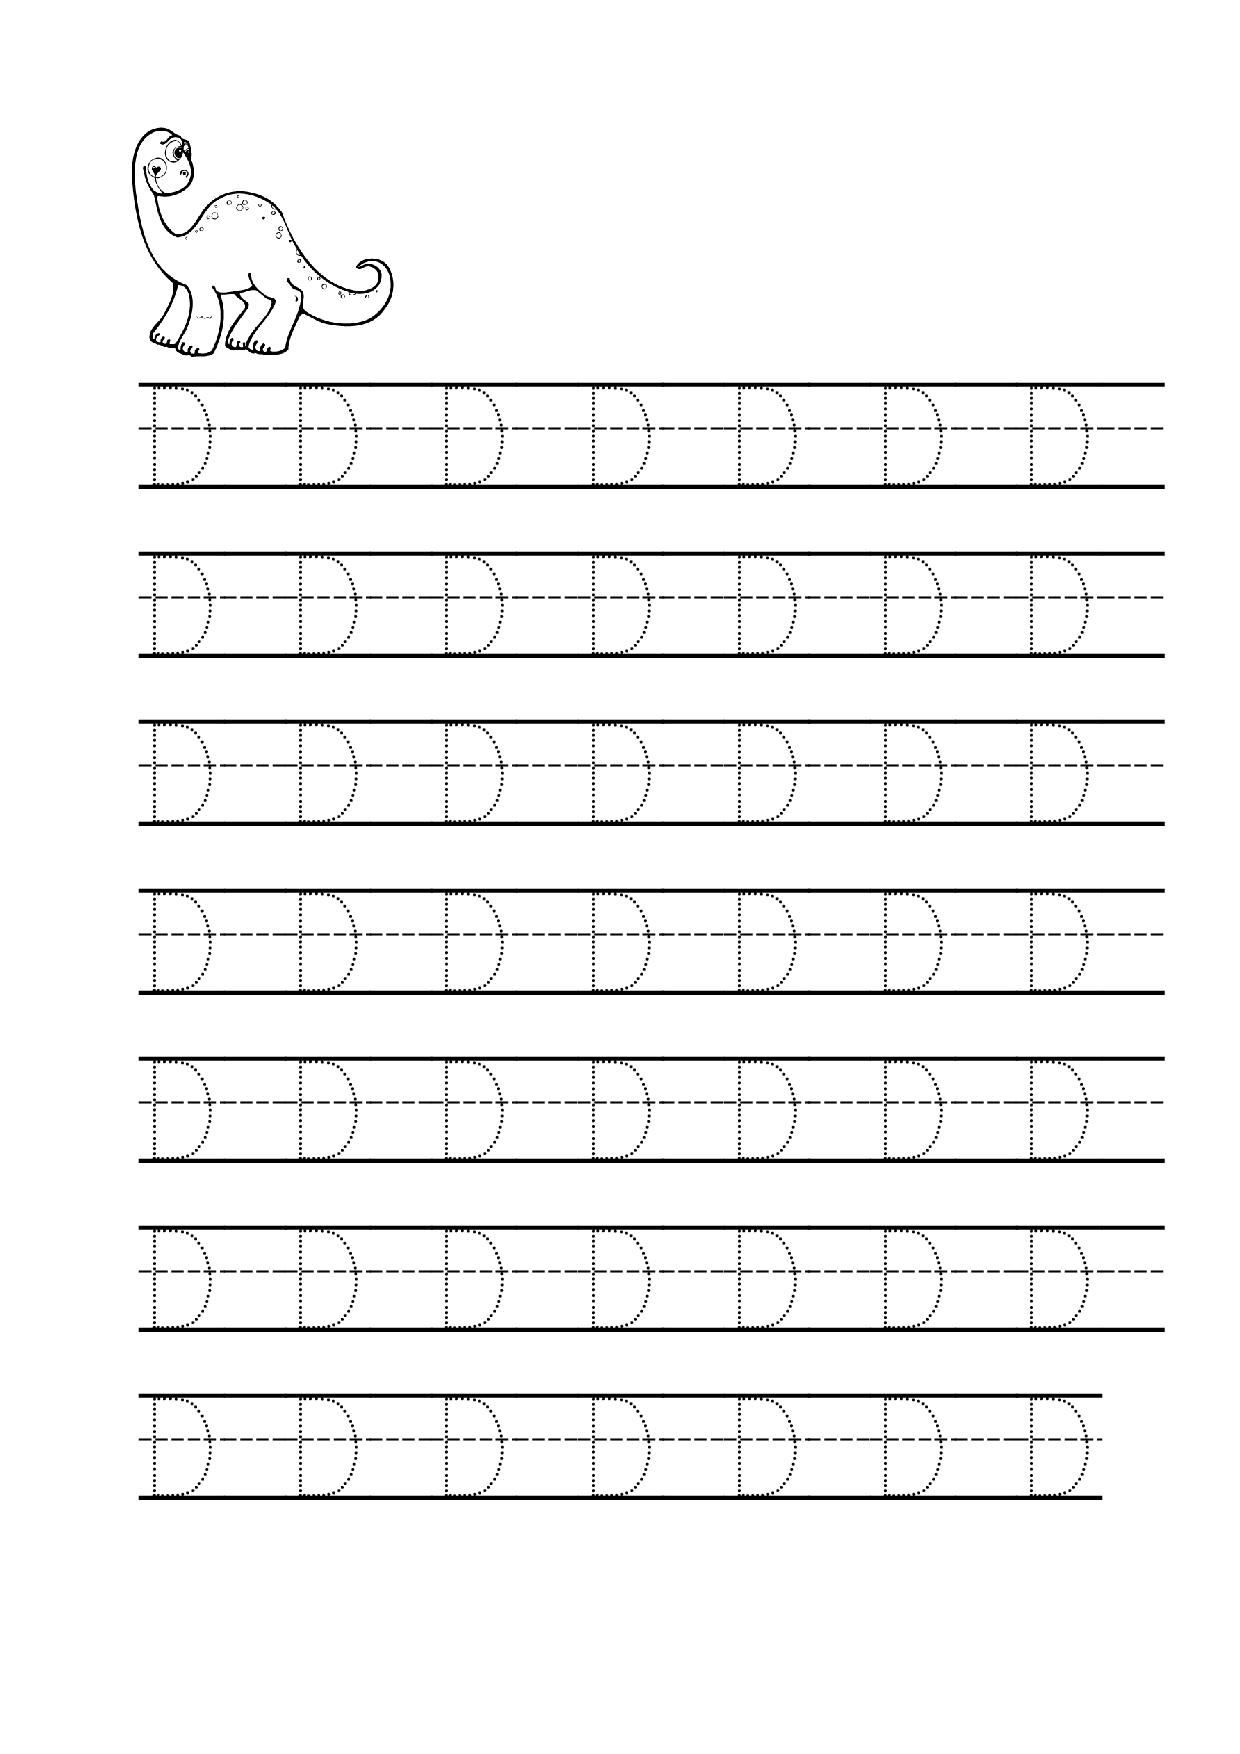 Tracing Letter D Worksheets For Preschool | Letter D regarding Letter D Worksheets For Pre K